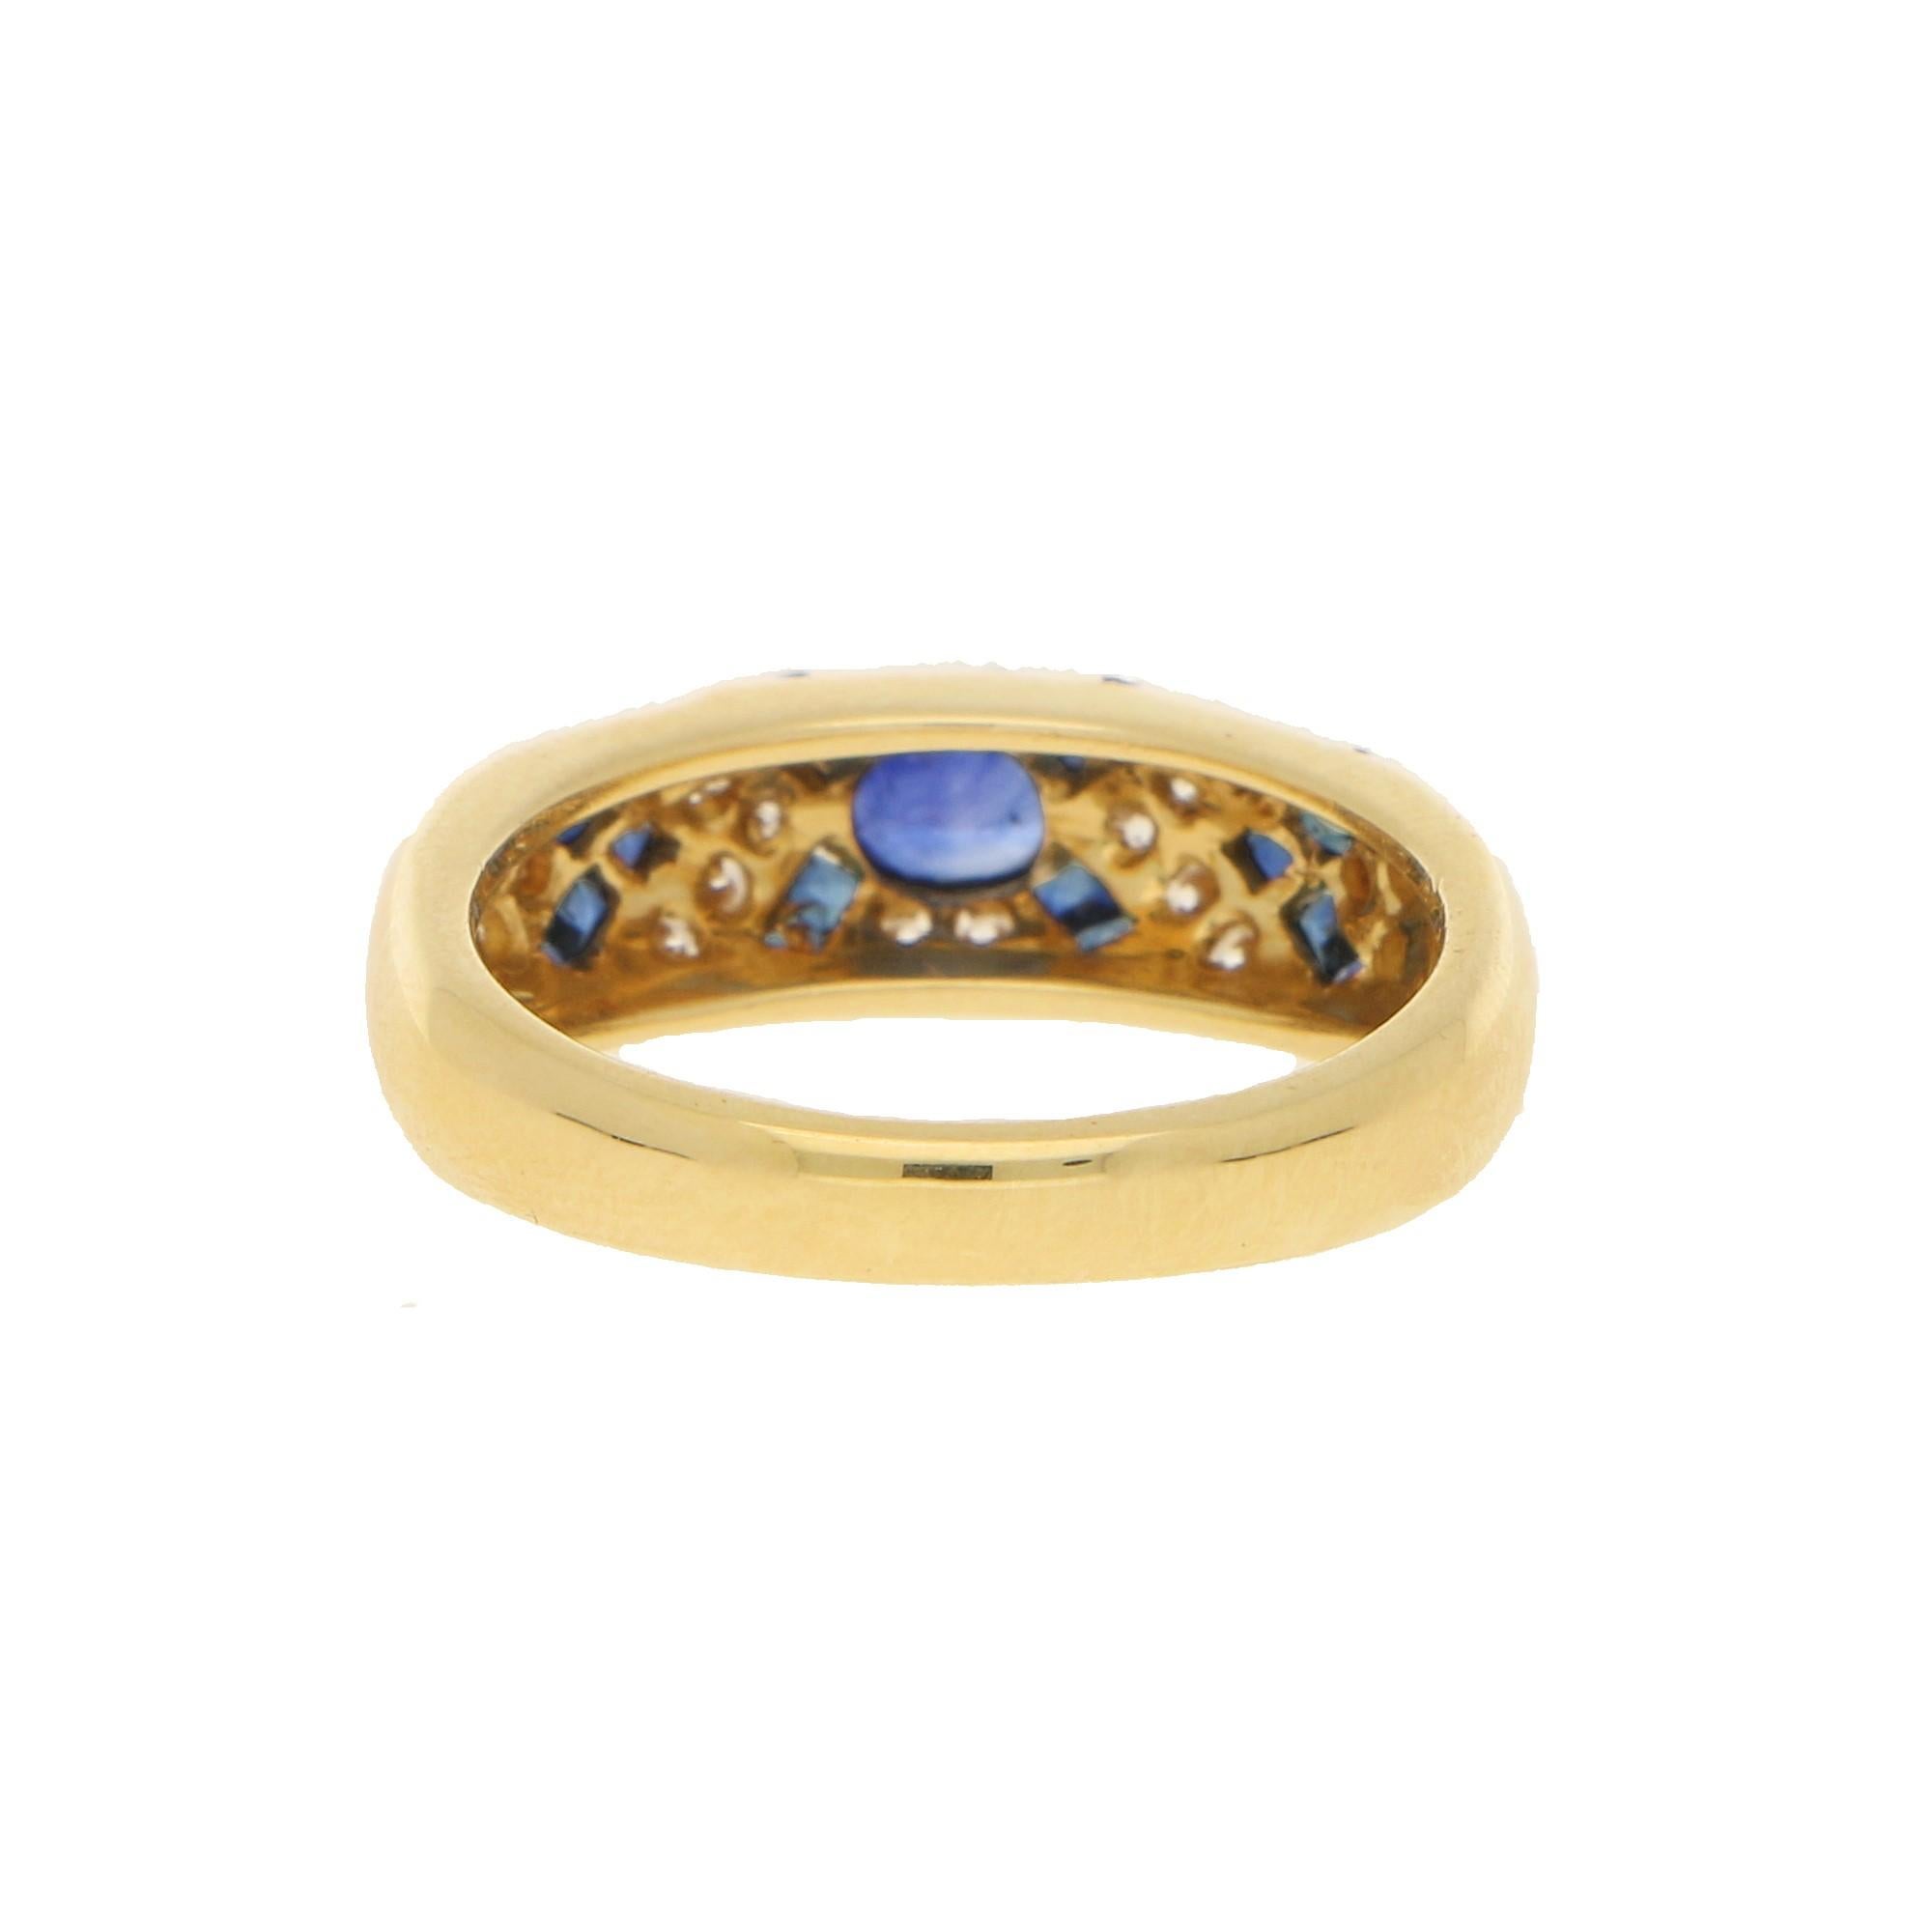 Women's or Men's David Morris Sapphire and Diamond Ring in 18 Carat Yellow Gold